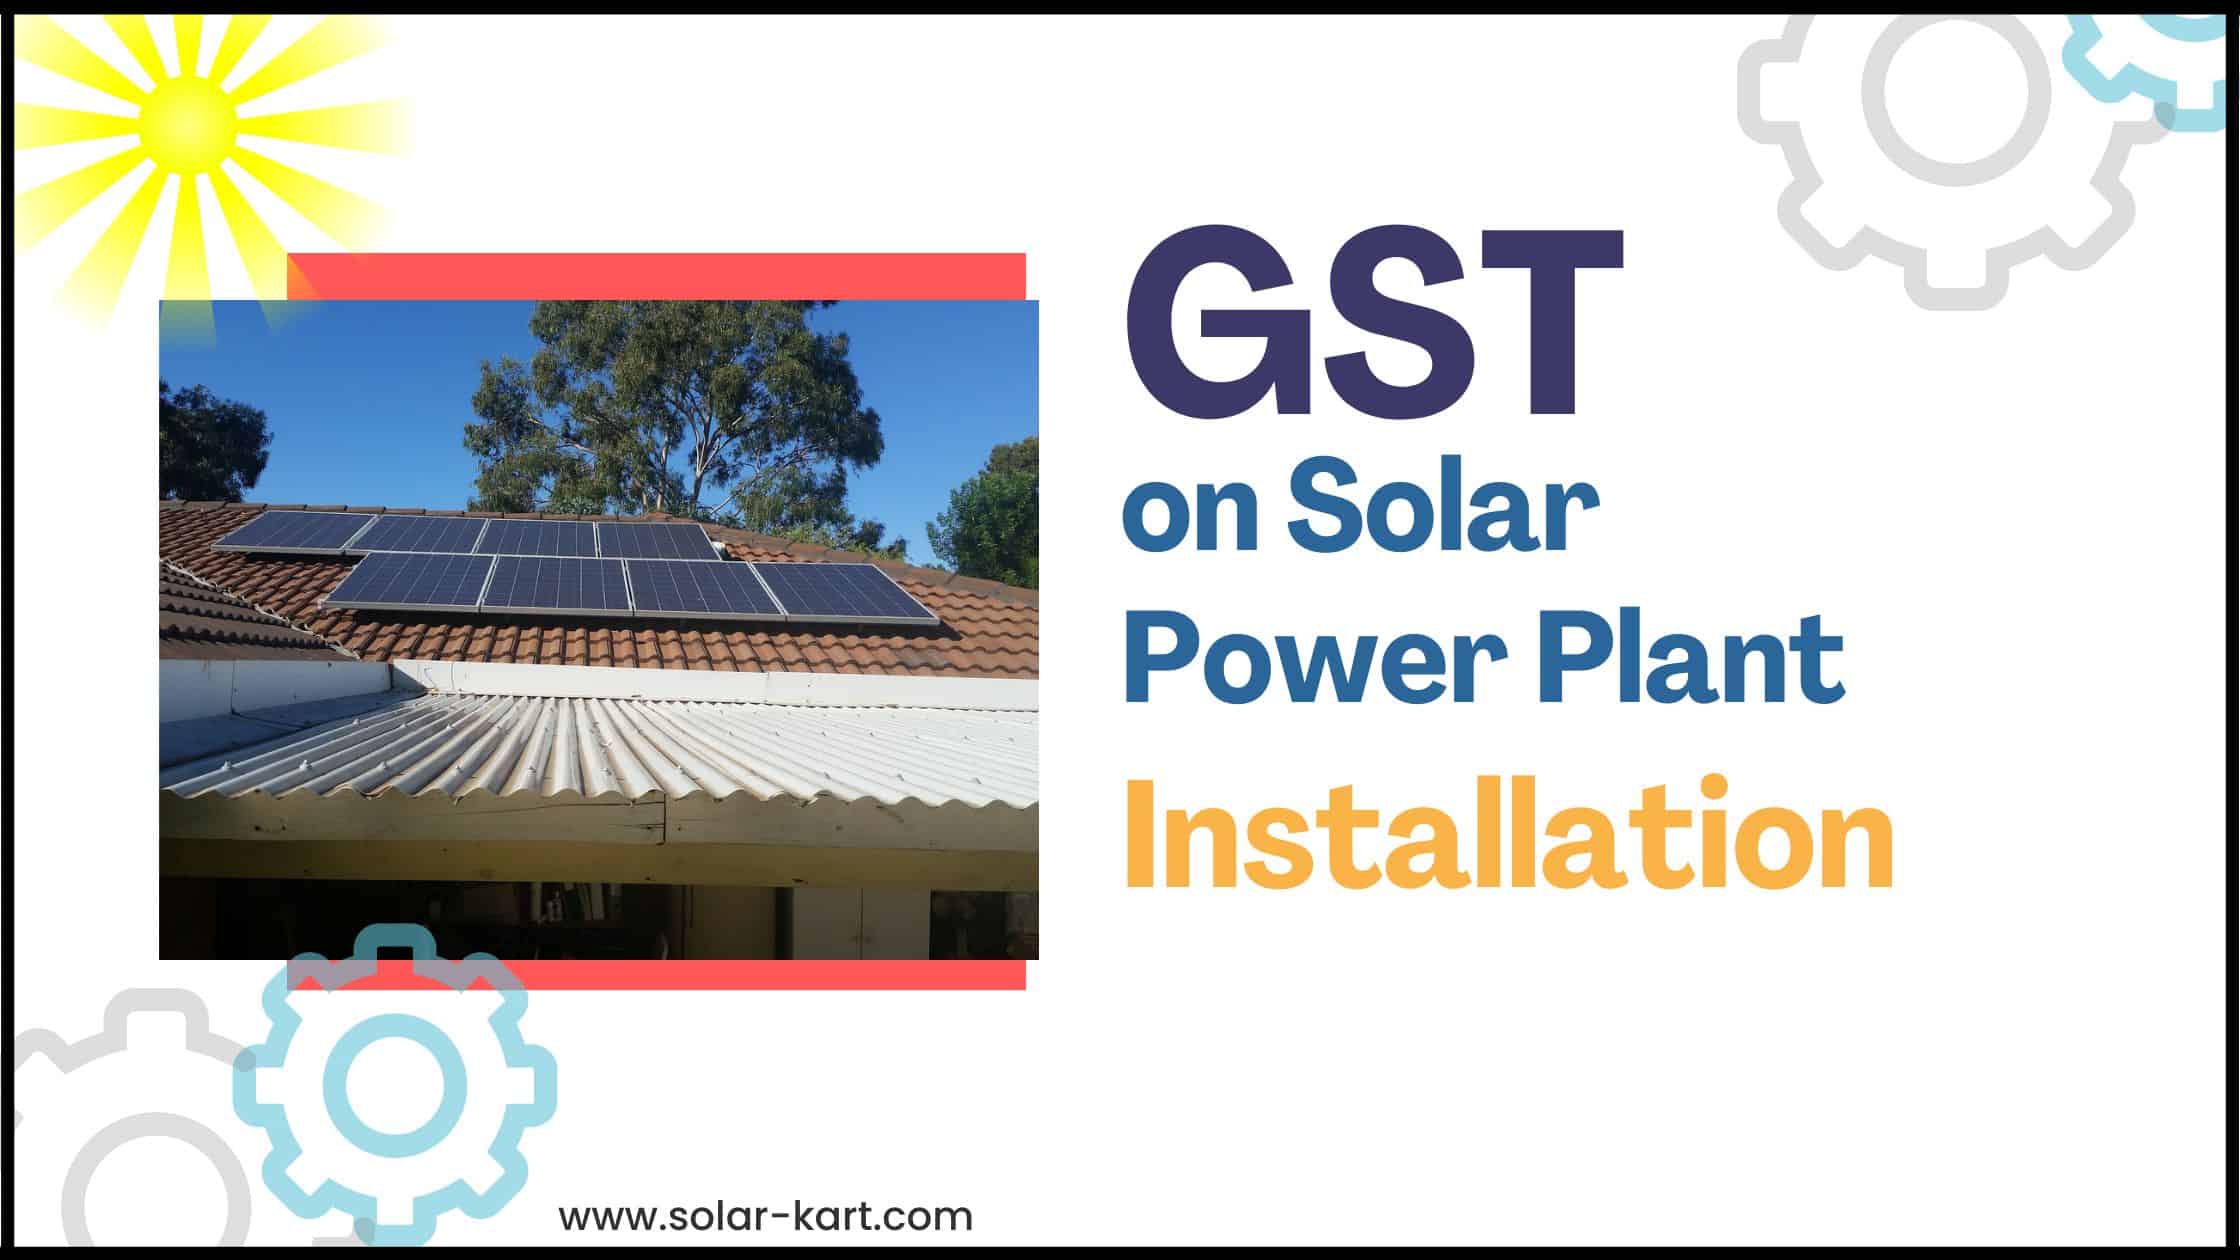 GST on Solar Power Plant Installation